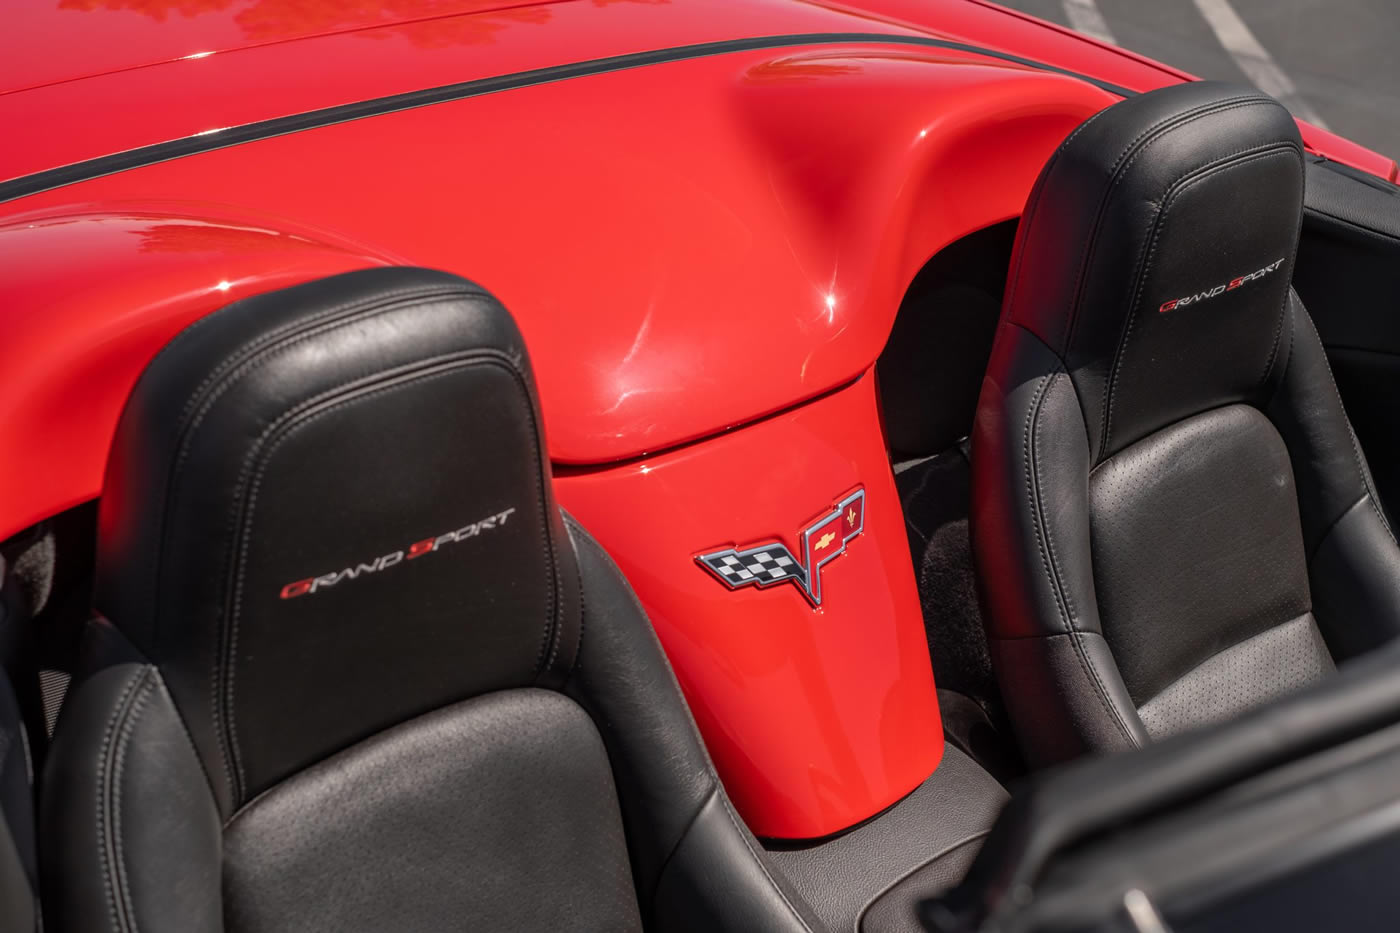 2011 Corvette Grand Sport Convertible in Torch Red